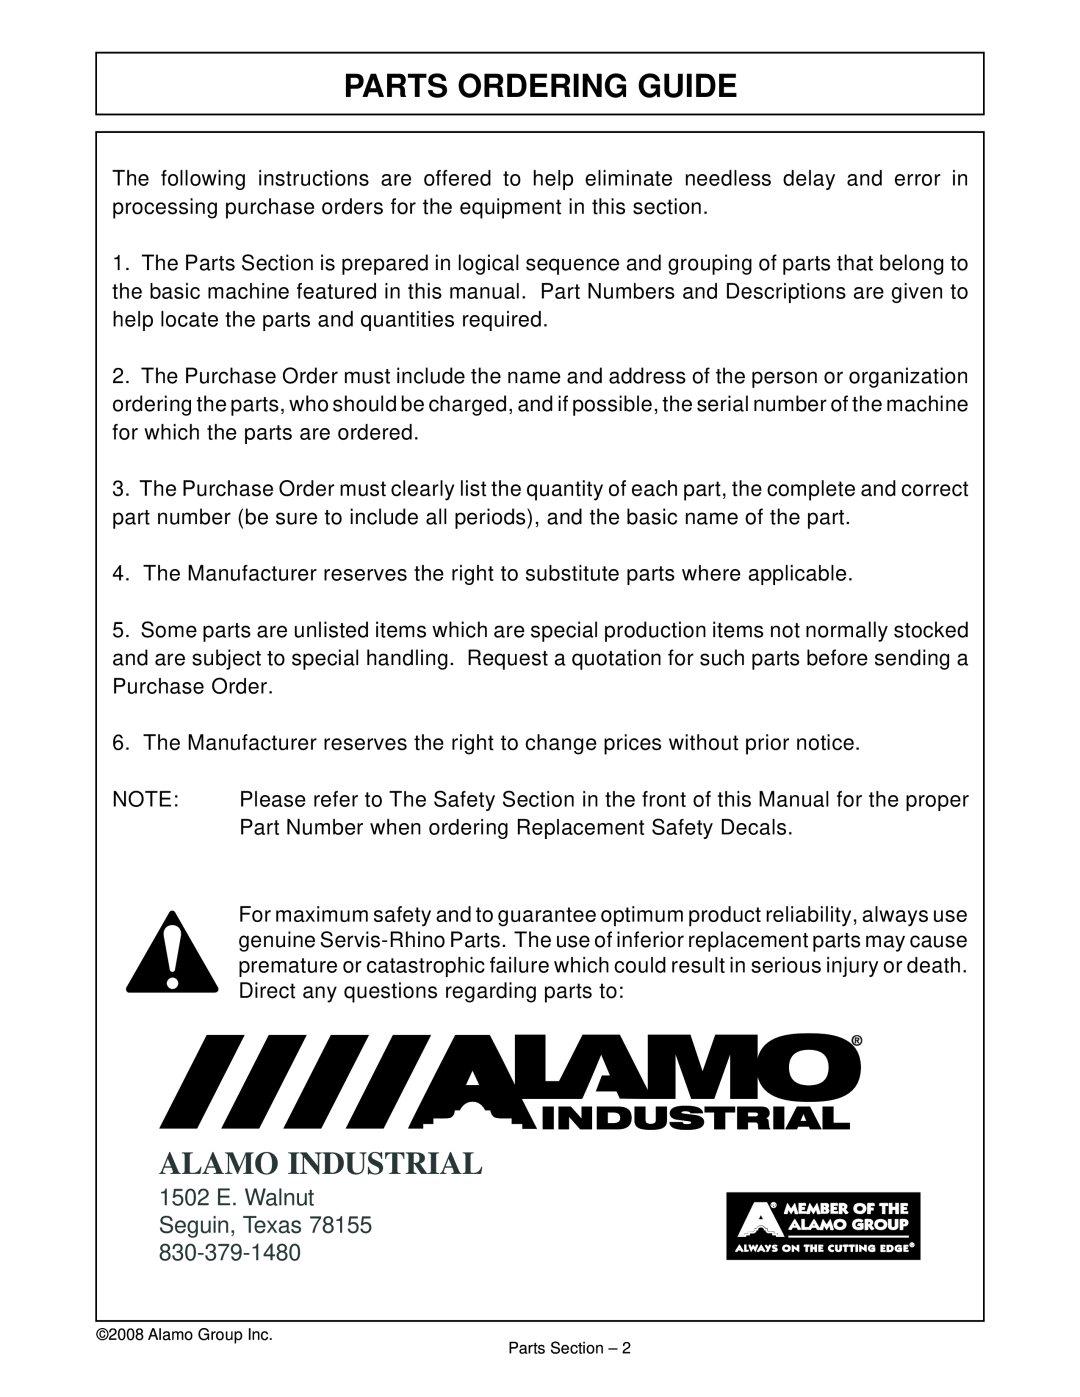 Alamo 02983326P manual Parts Ordering Guide, Alamo Industrial, 1502 E. Walnut Seguin, Texas 78155 